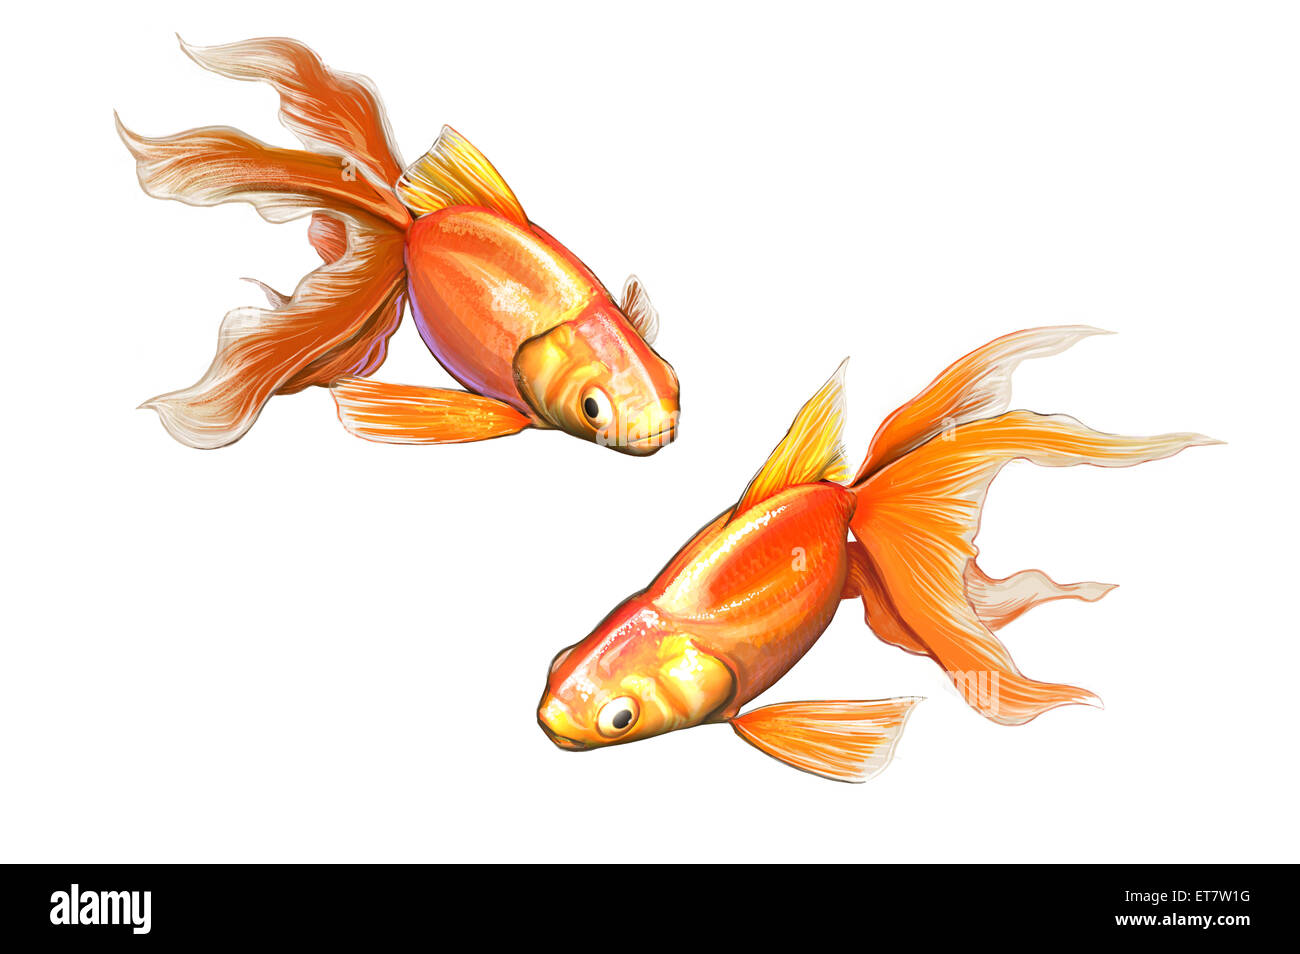 Goldfish, Illustration Technique, Stock Photo